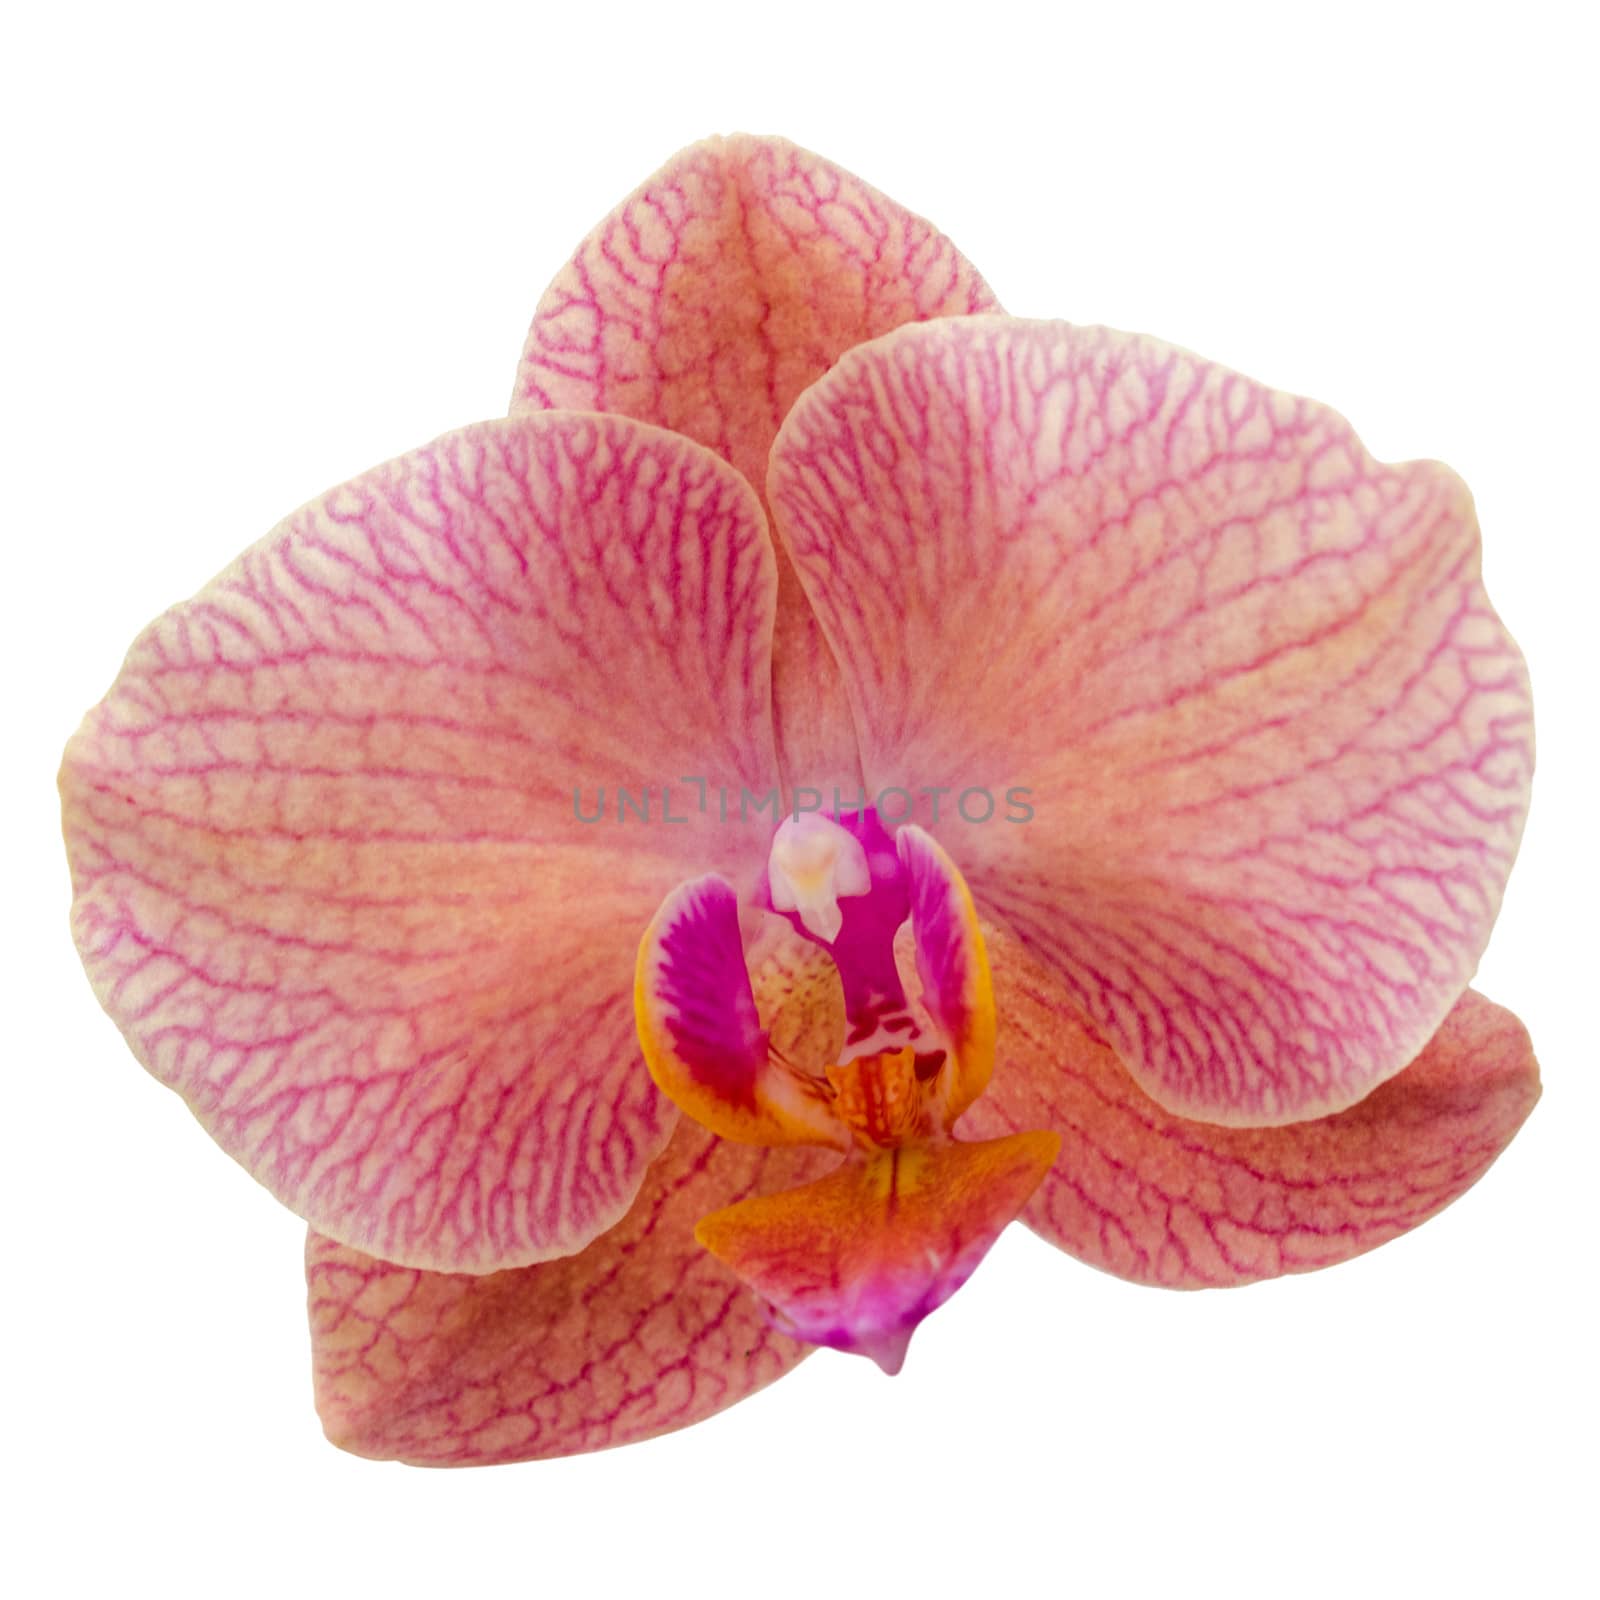 Single violet orchid flower by servickuz